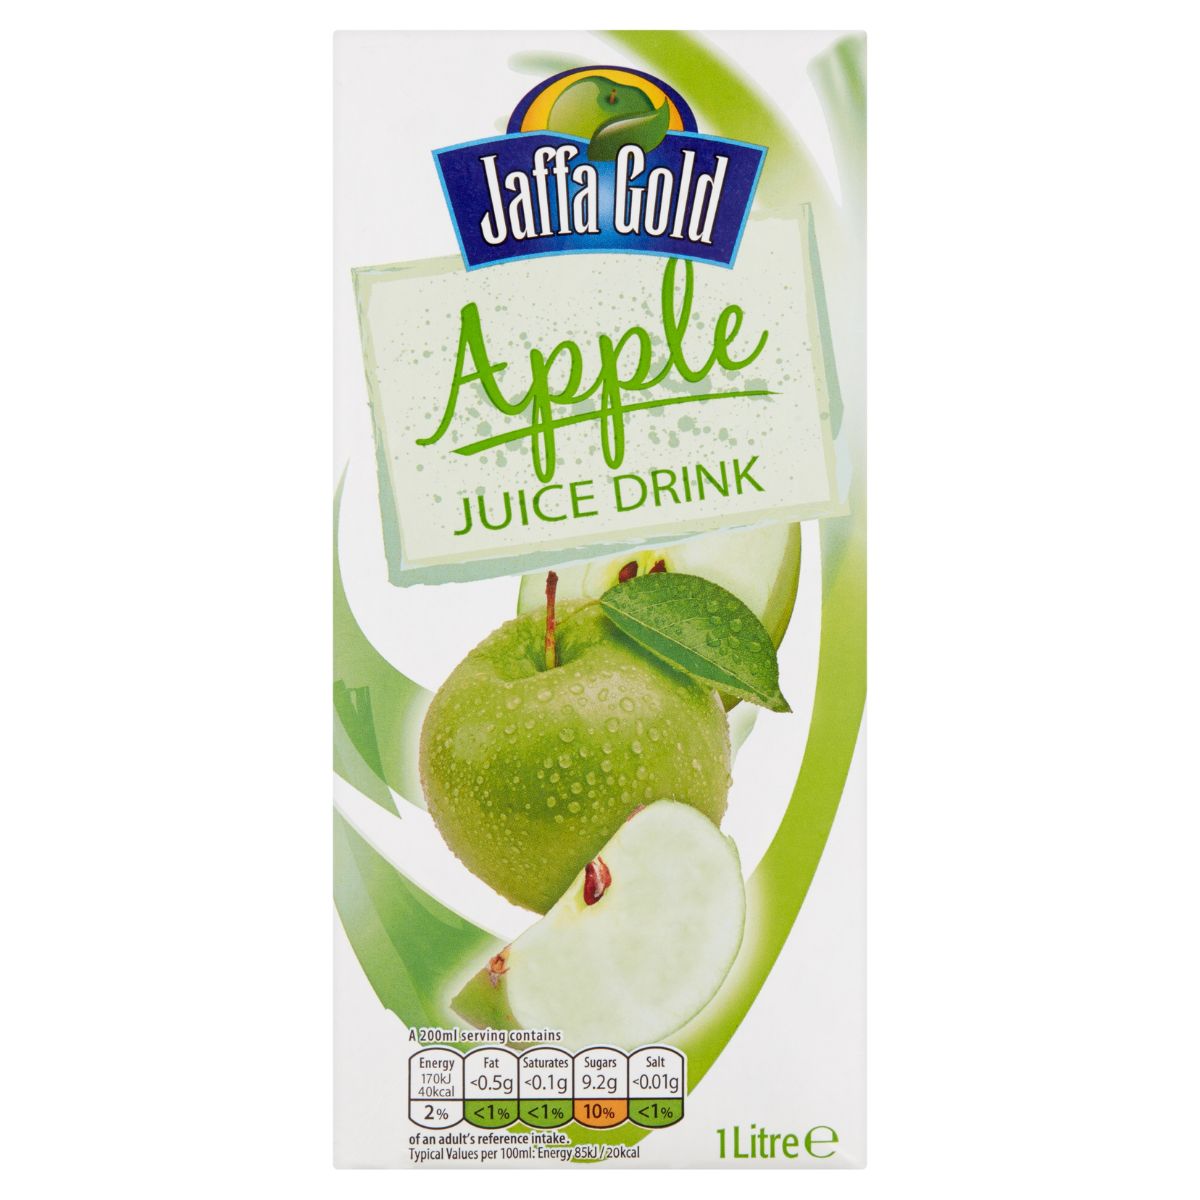 Jaffa Gold - Apple Juice Drink - 1 Litre.